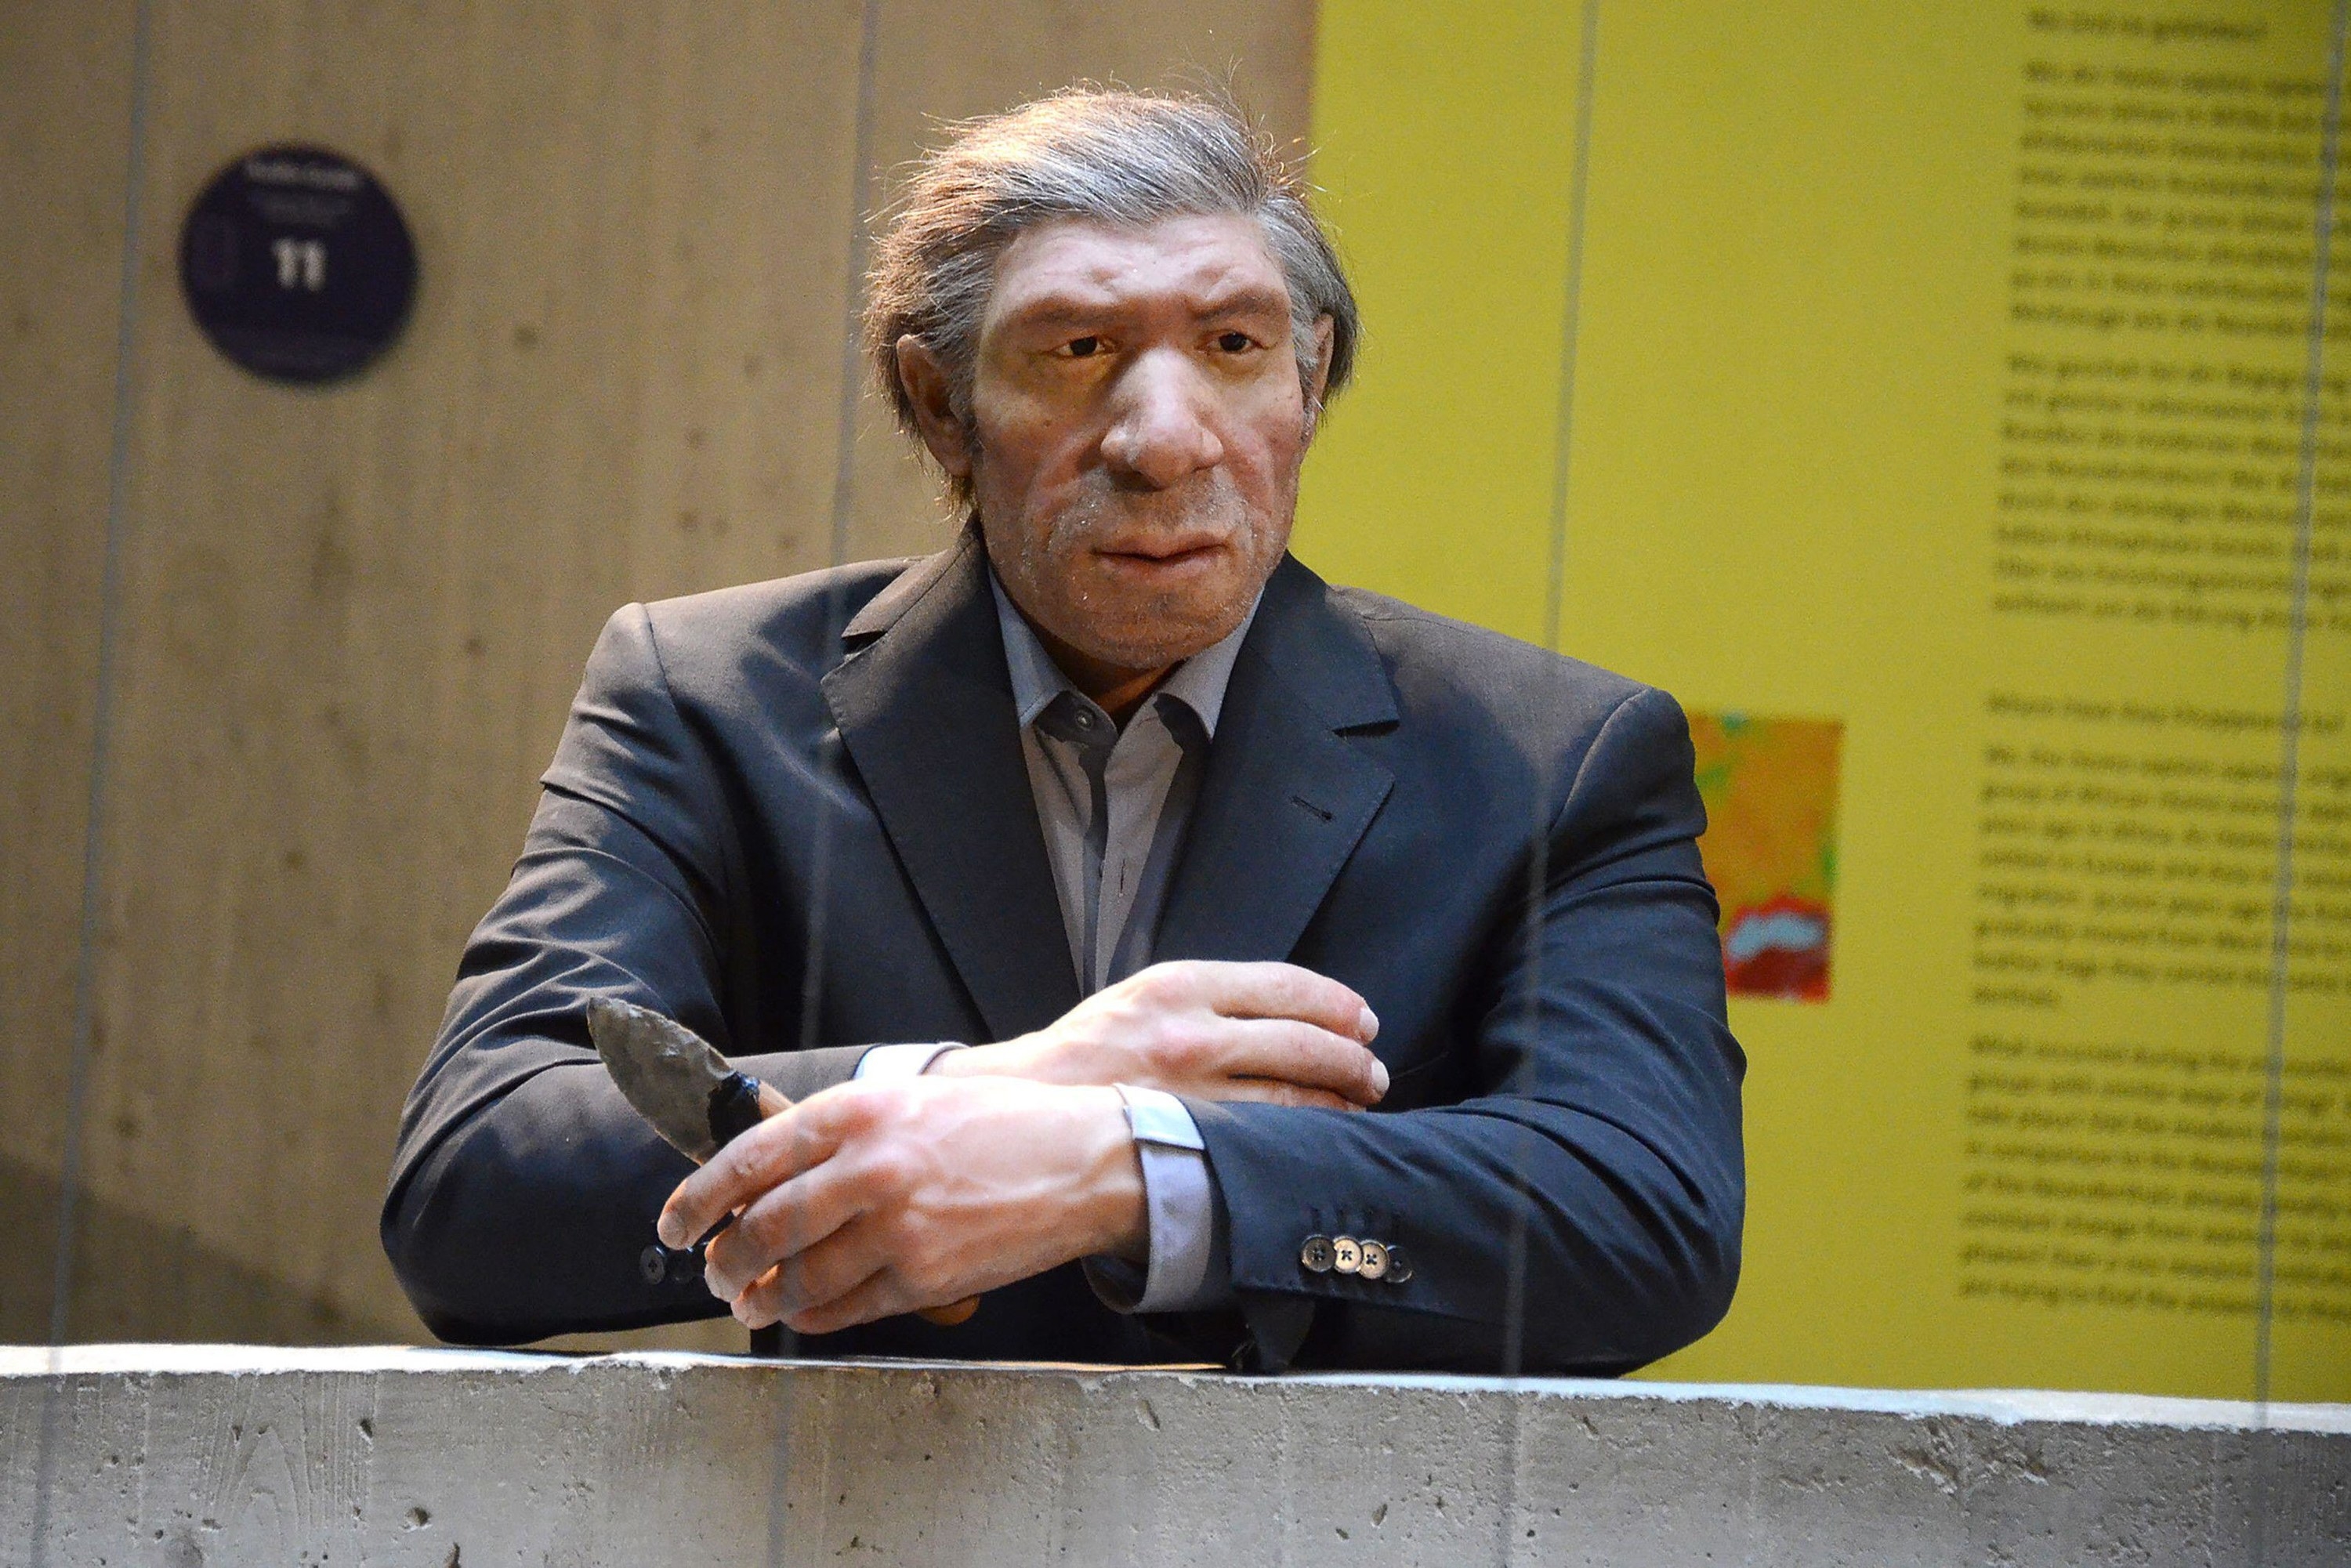 A modern neanderthal